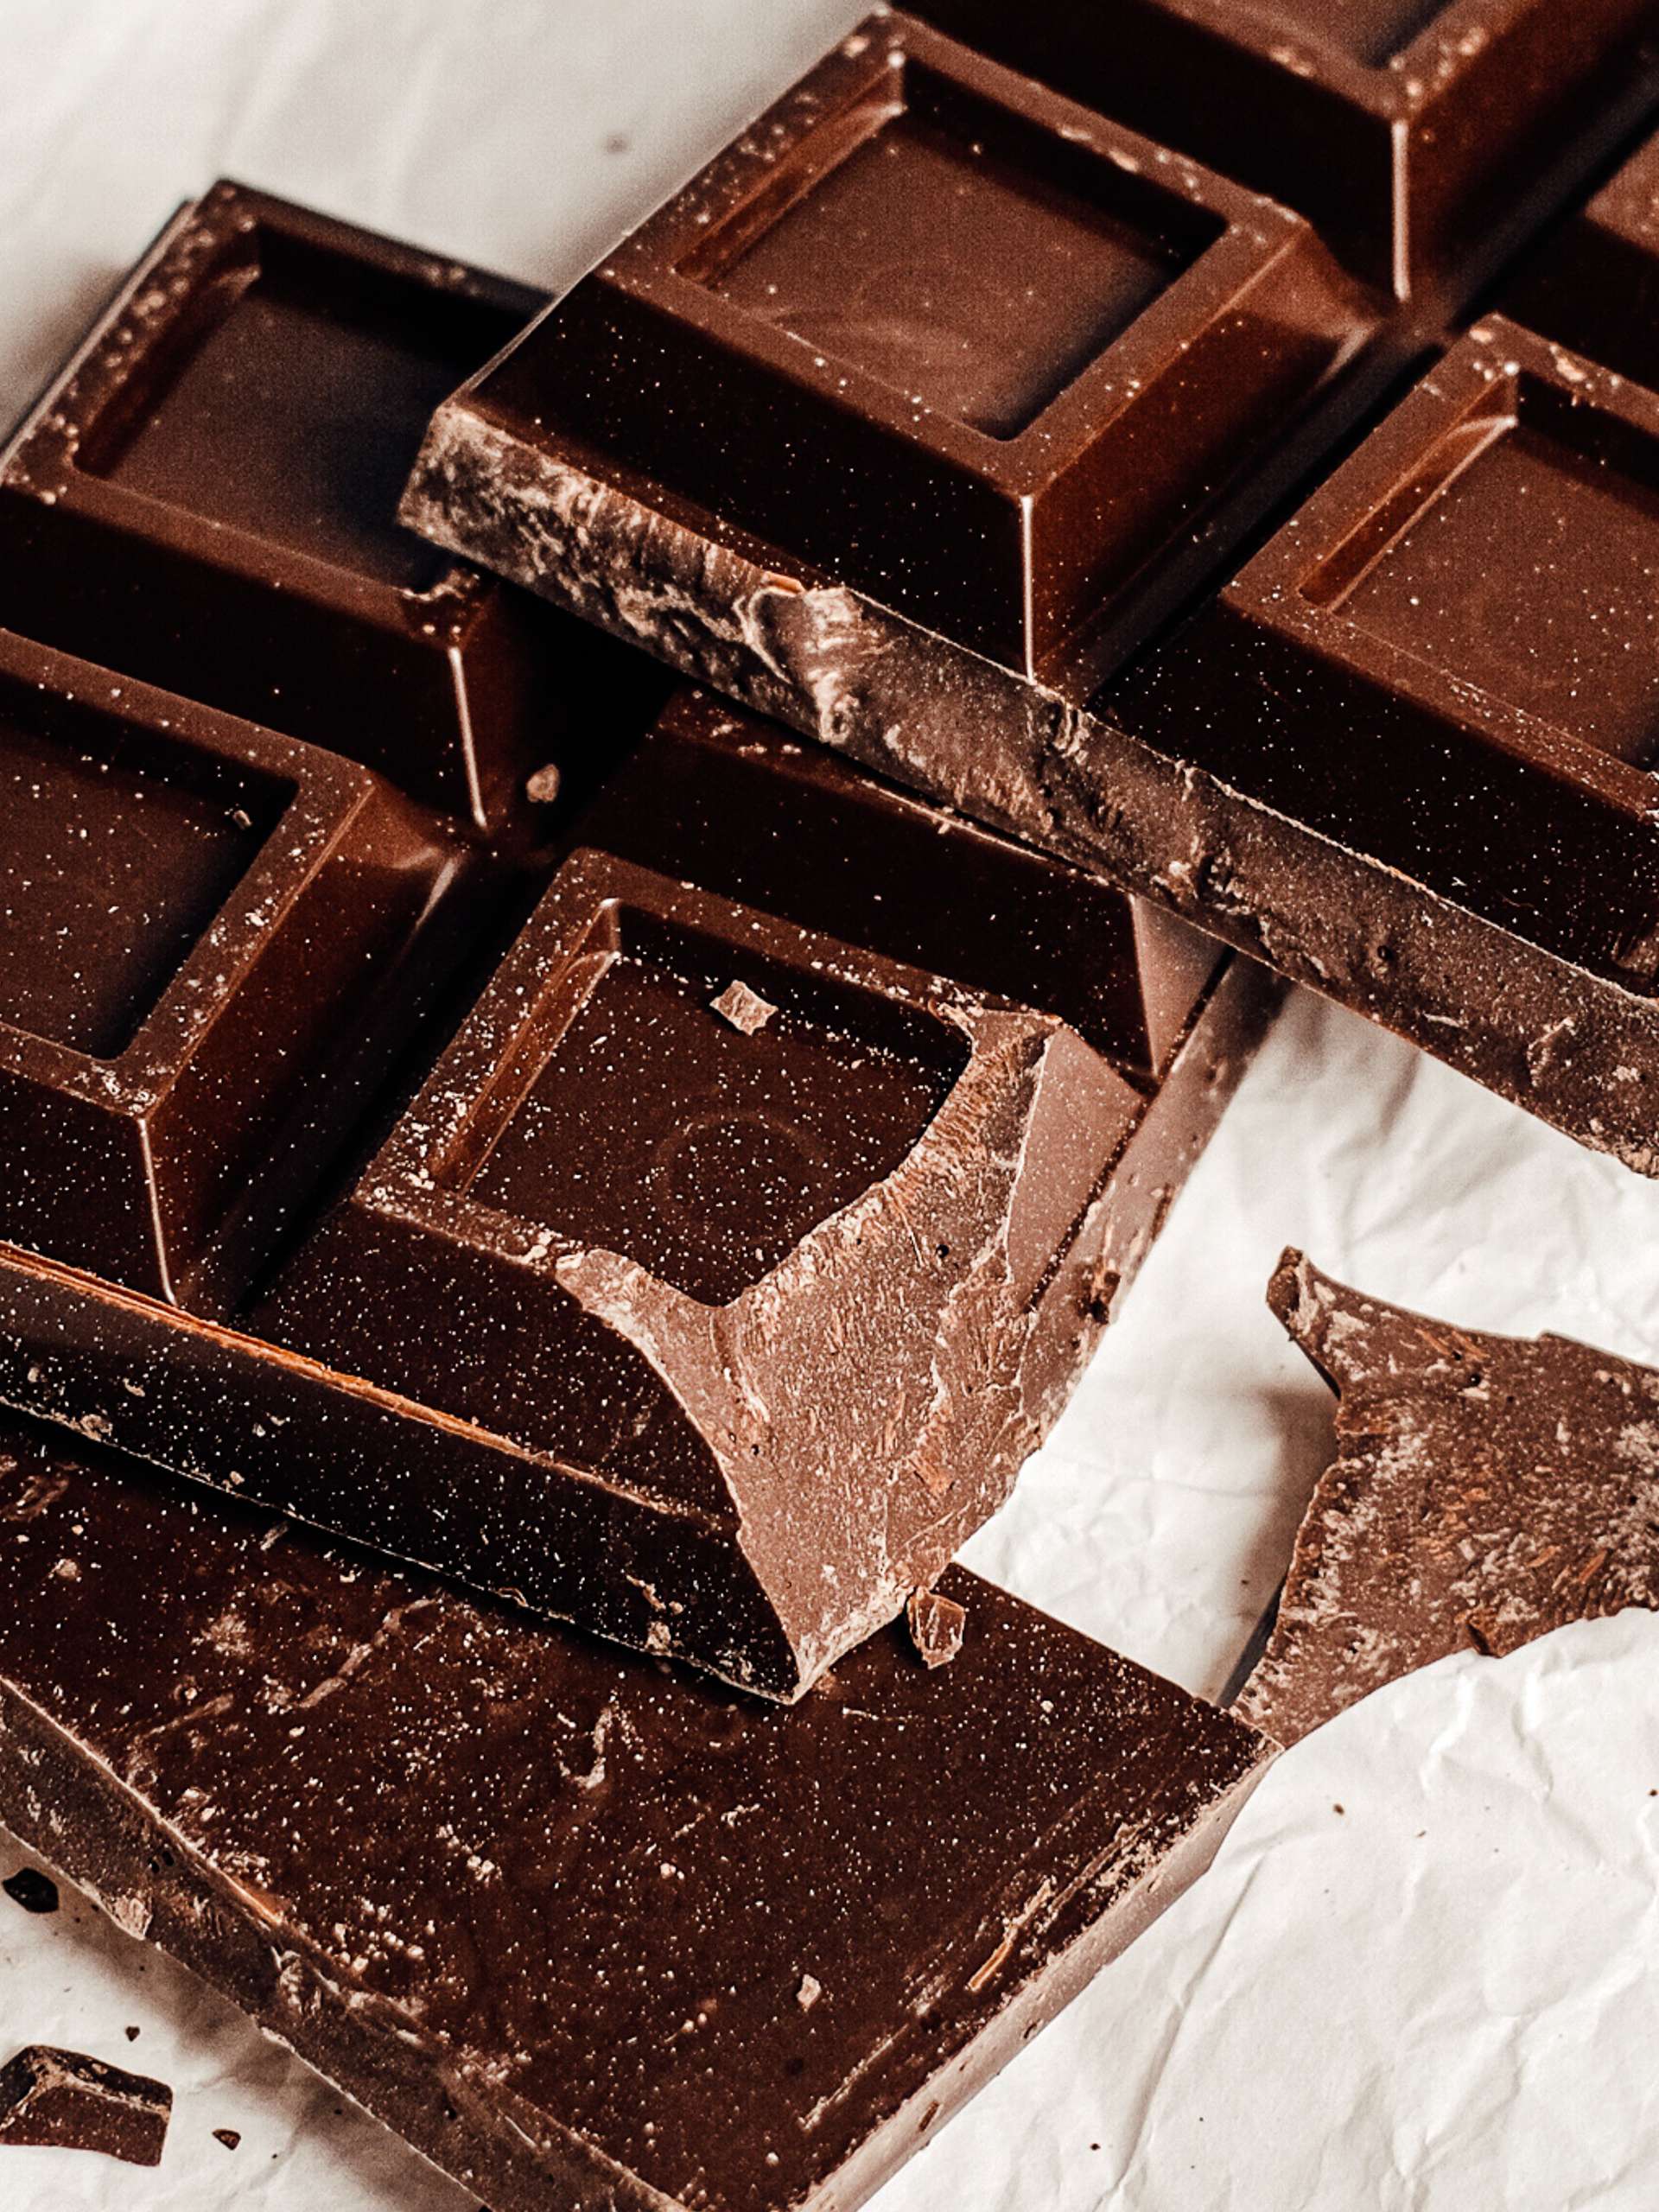 3 Surprising Health Benefits of Chocolate